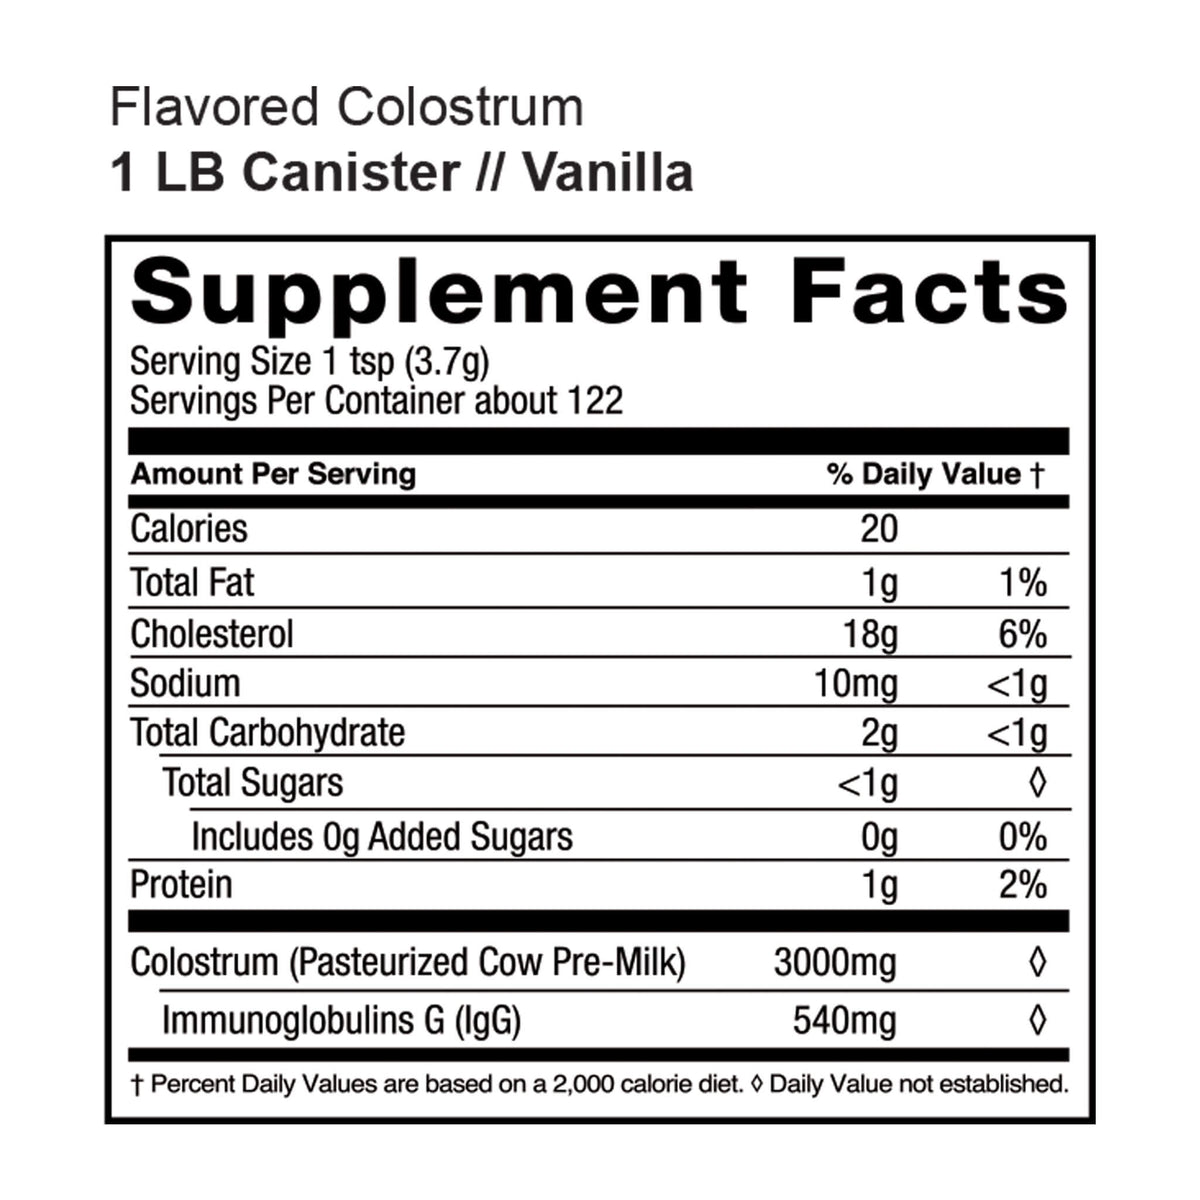 Flavored Colostrum